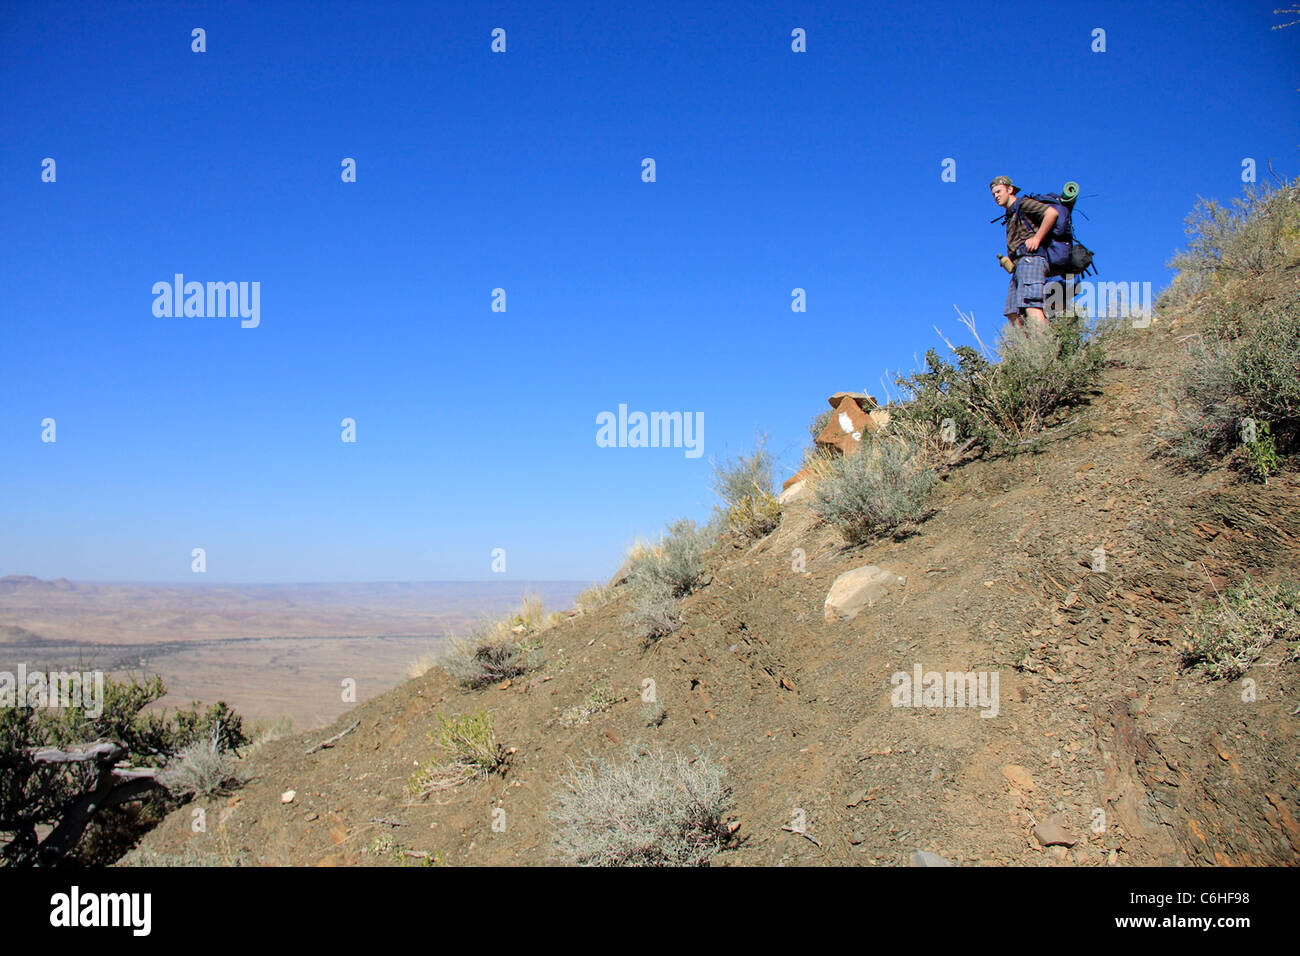 Hiker in desert landscape with footprint marker Stock Photo